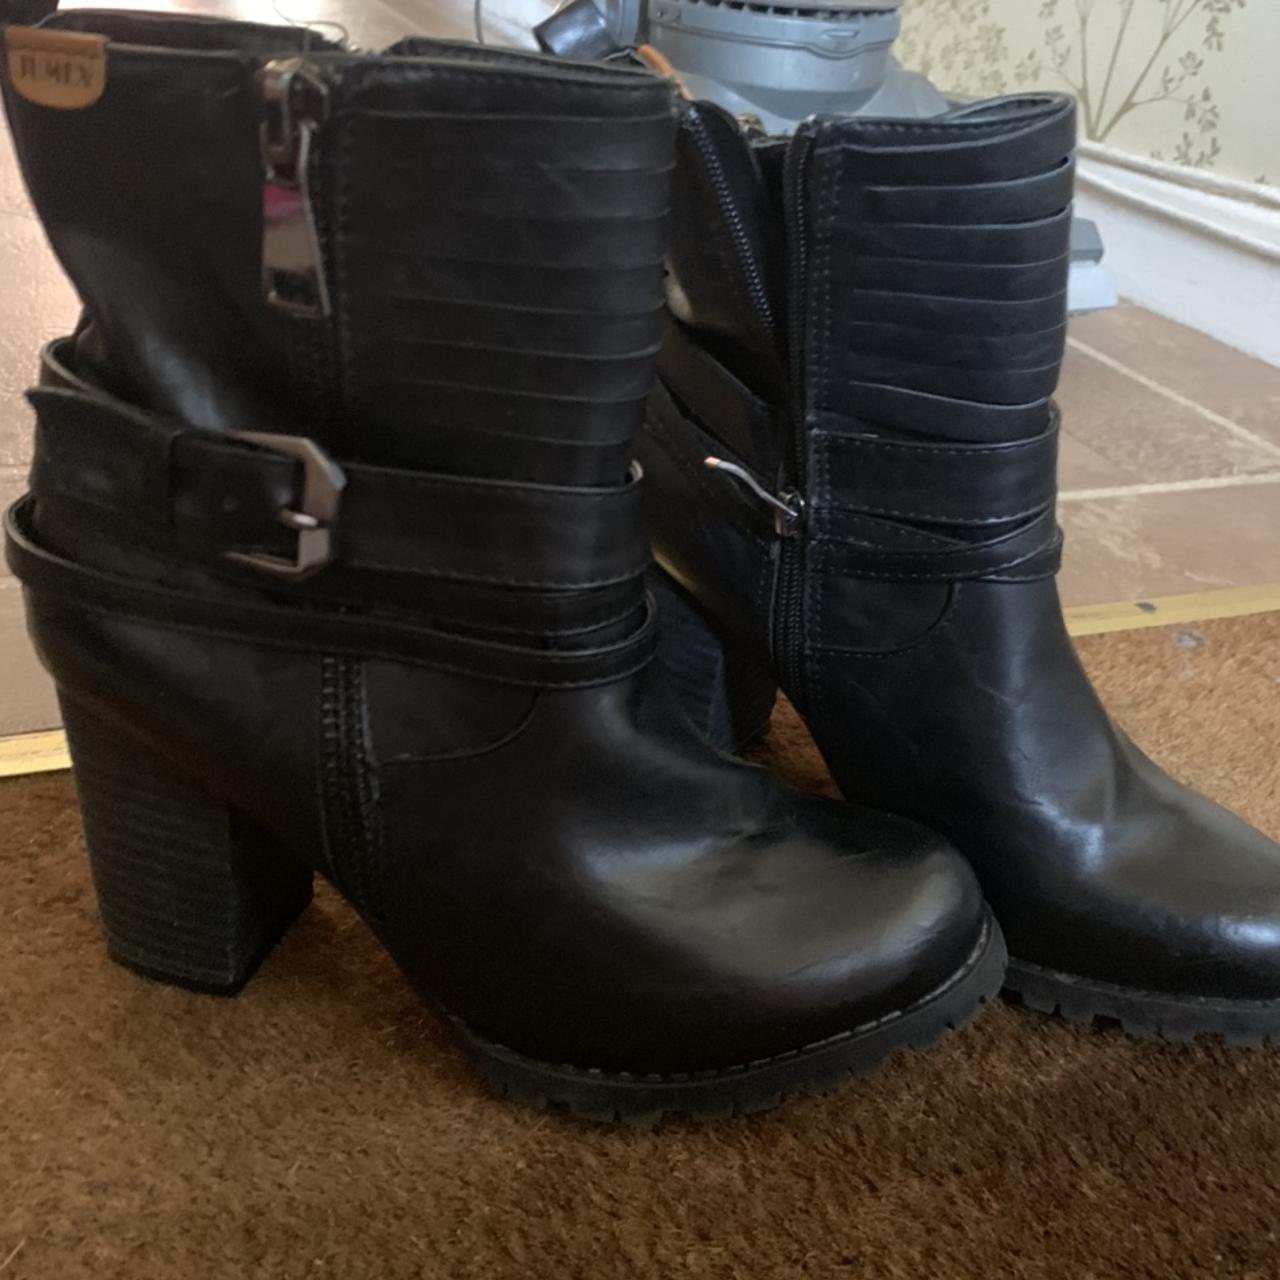 Worn black ankle boots, size 3 - Depop